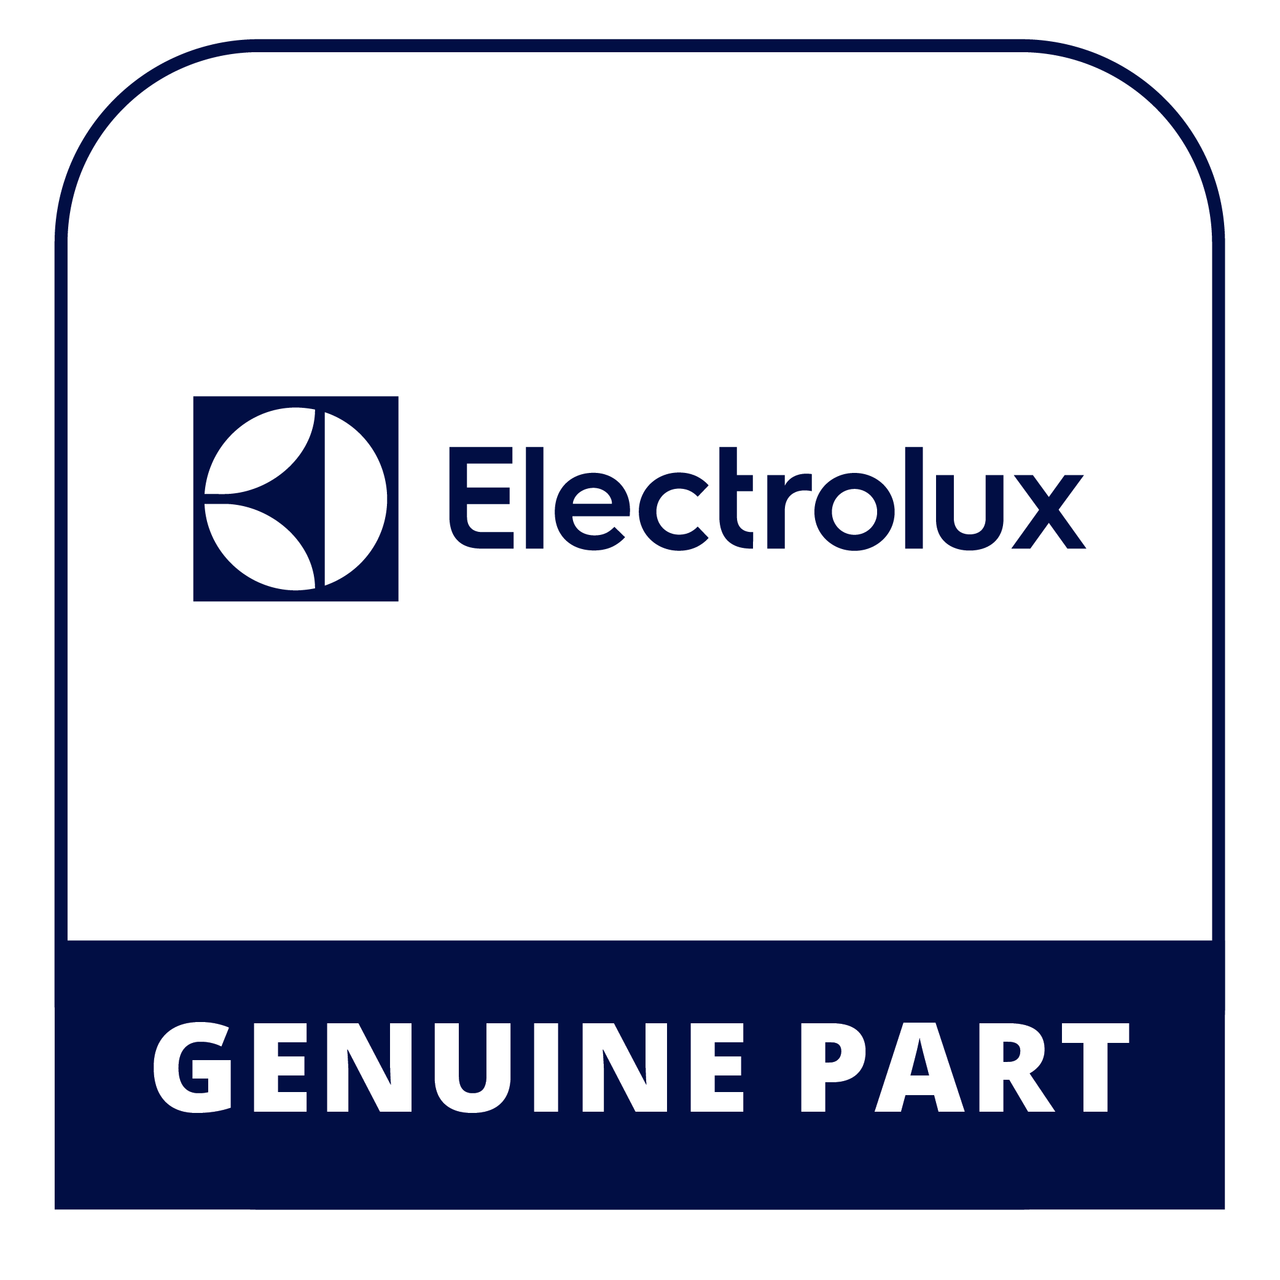 Frigidaire - Electrolux 316435705 Board - Genuine Electrolux Part